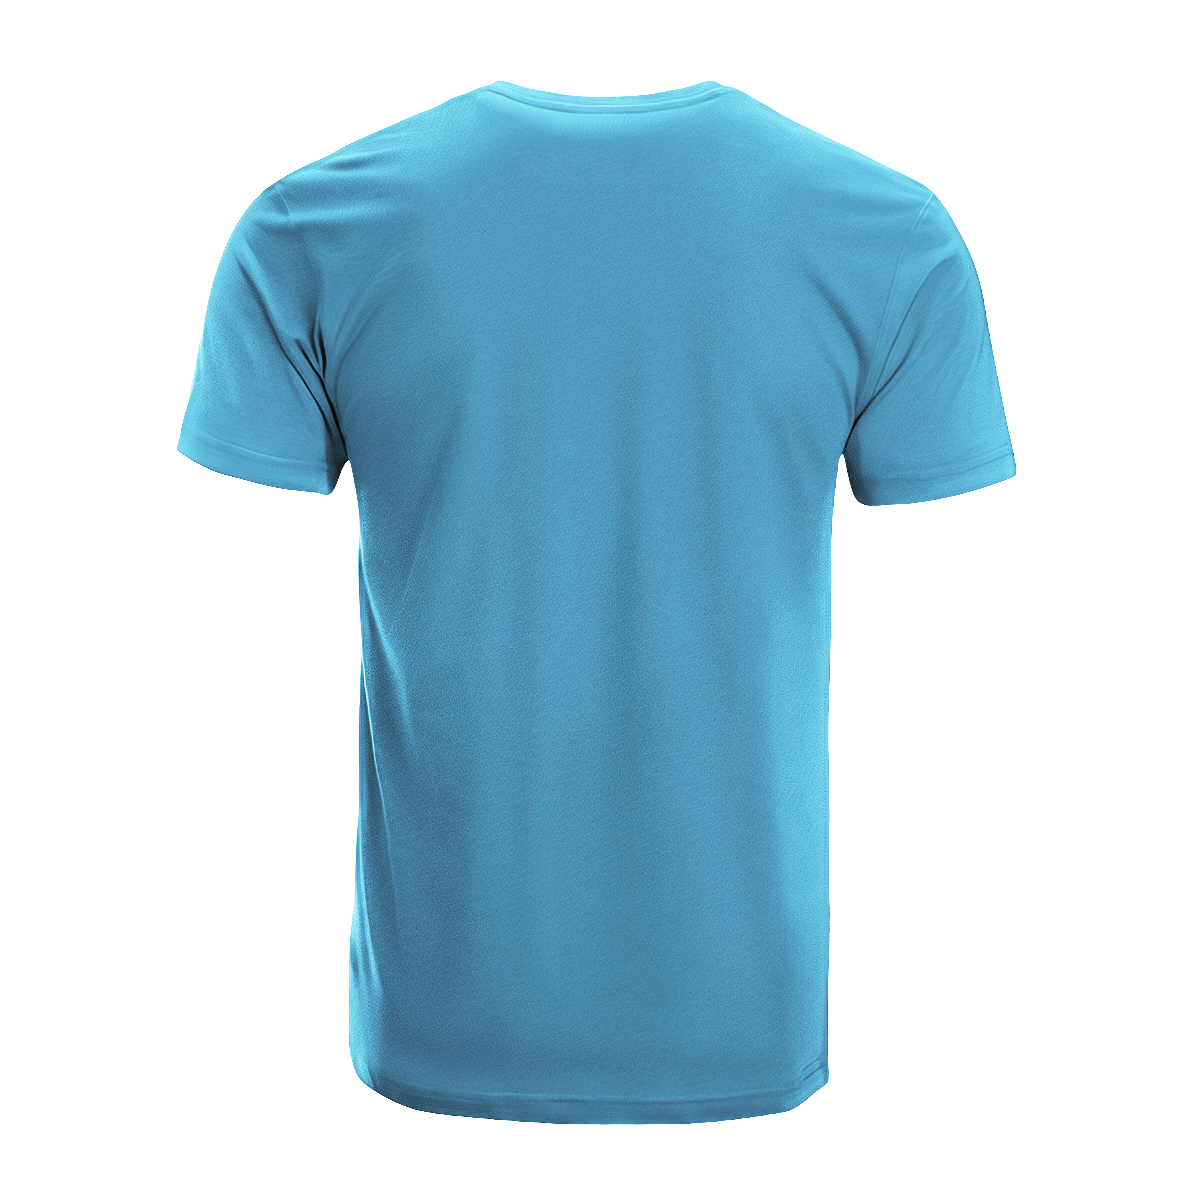 Bain Tartan Crest T-shirt - I'm not yelling style